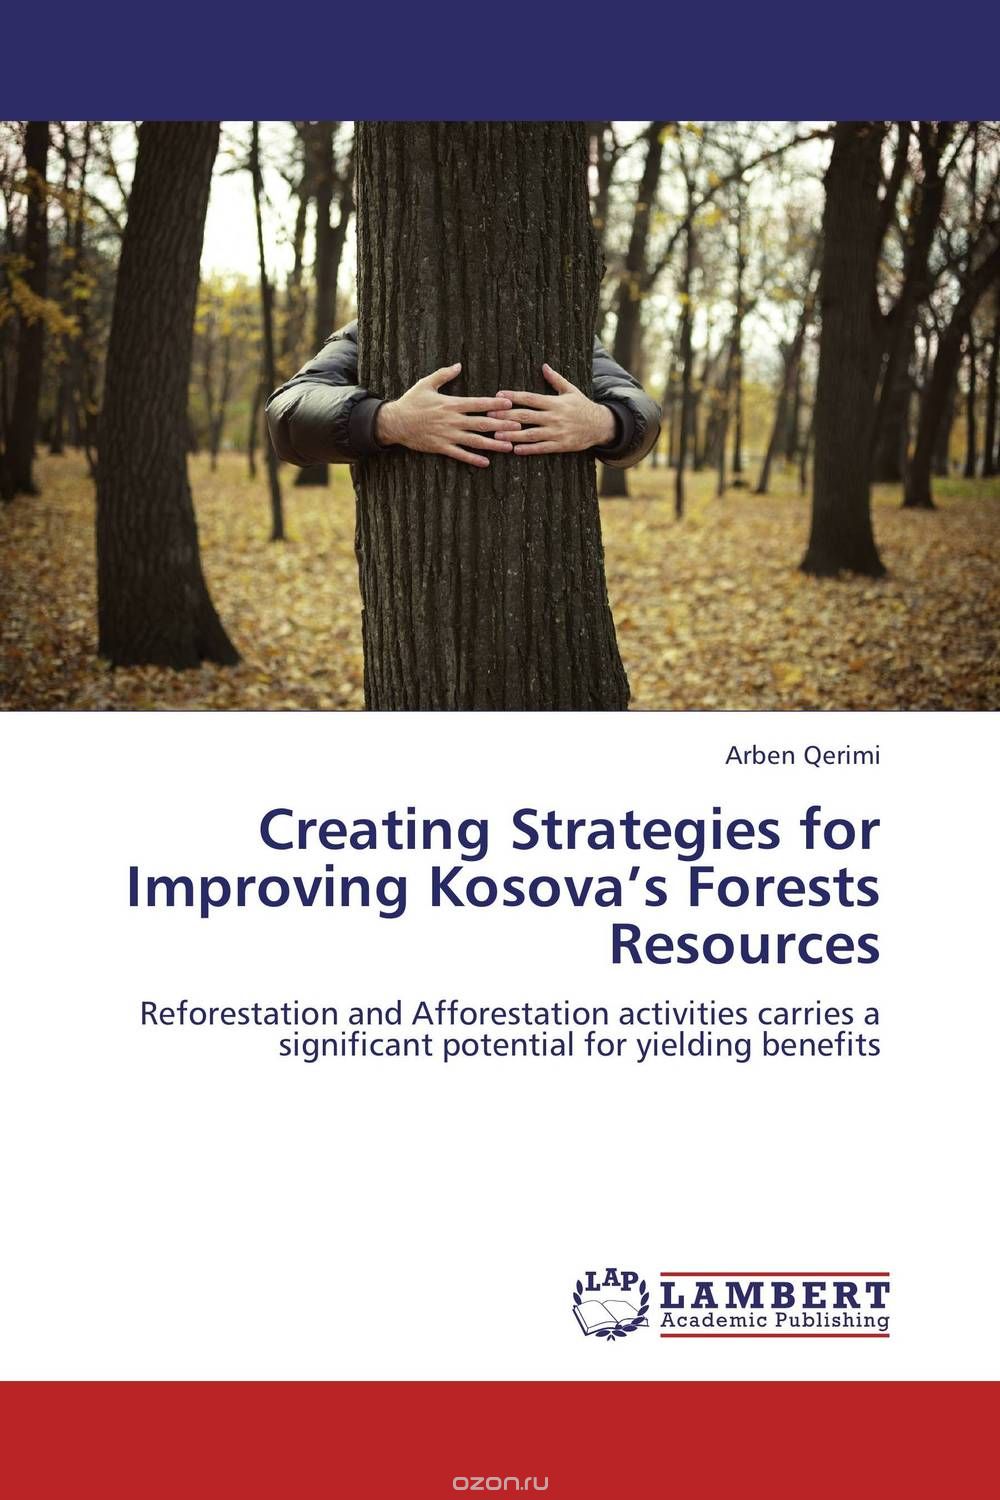 Скачать книгу "Creating Strategies for Improving Kosova’s Forests Resources"